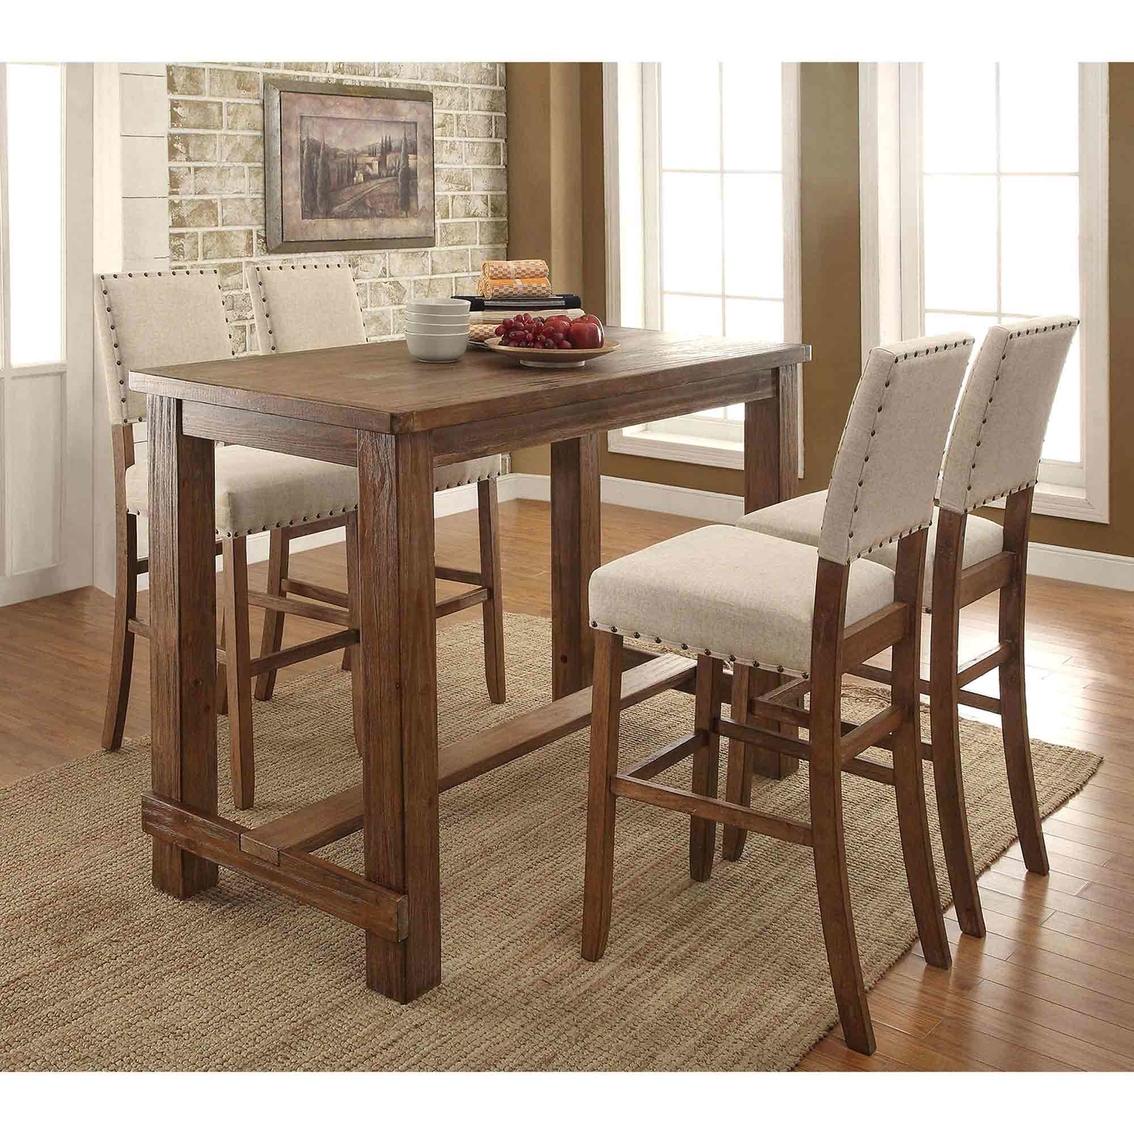 Furniture of America Sania II Bar Table - Image 2 of 2